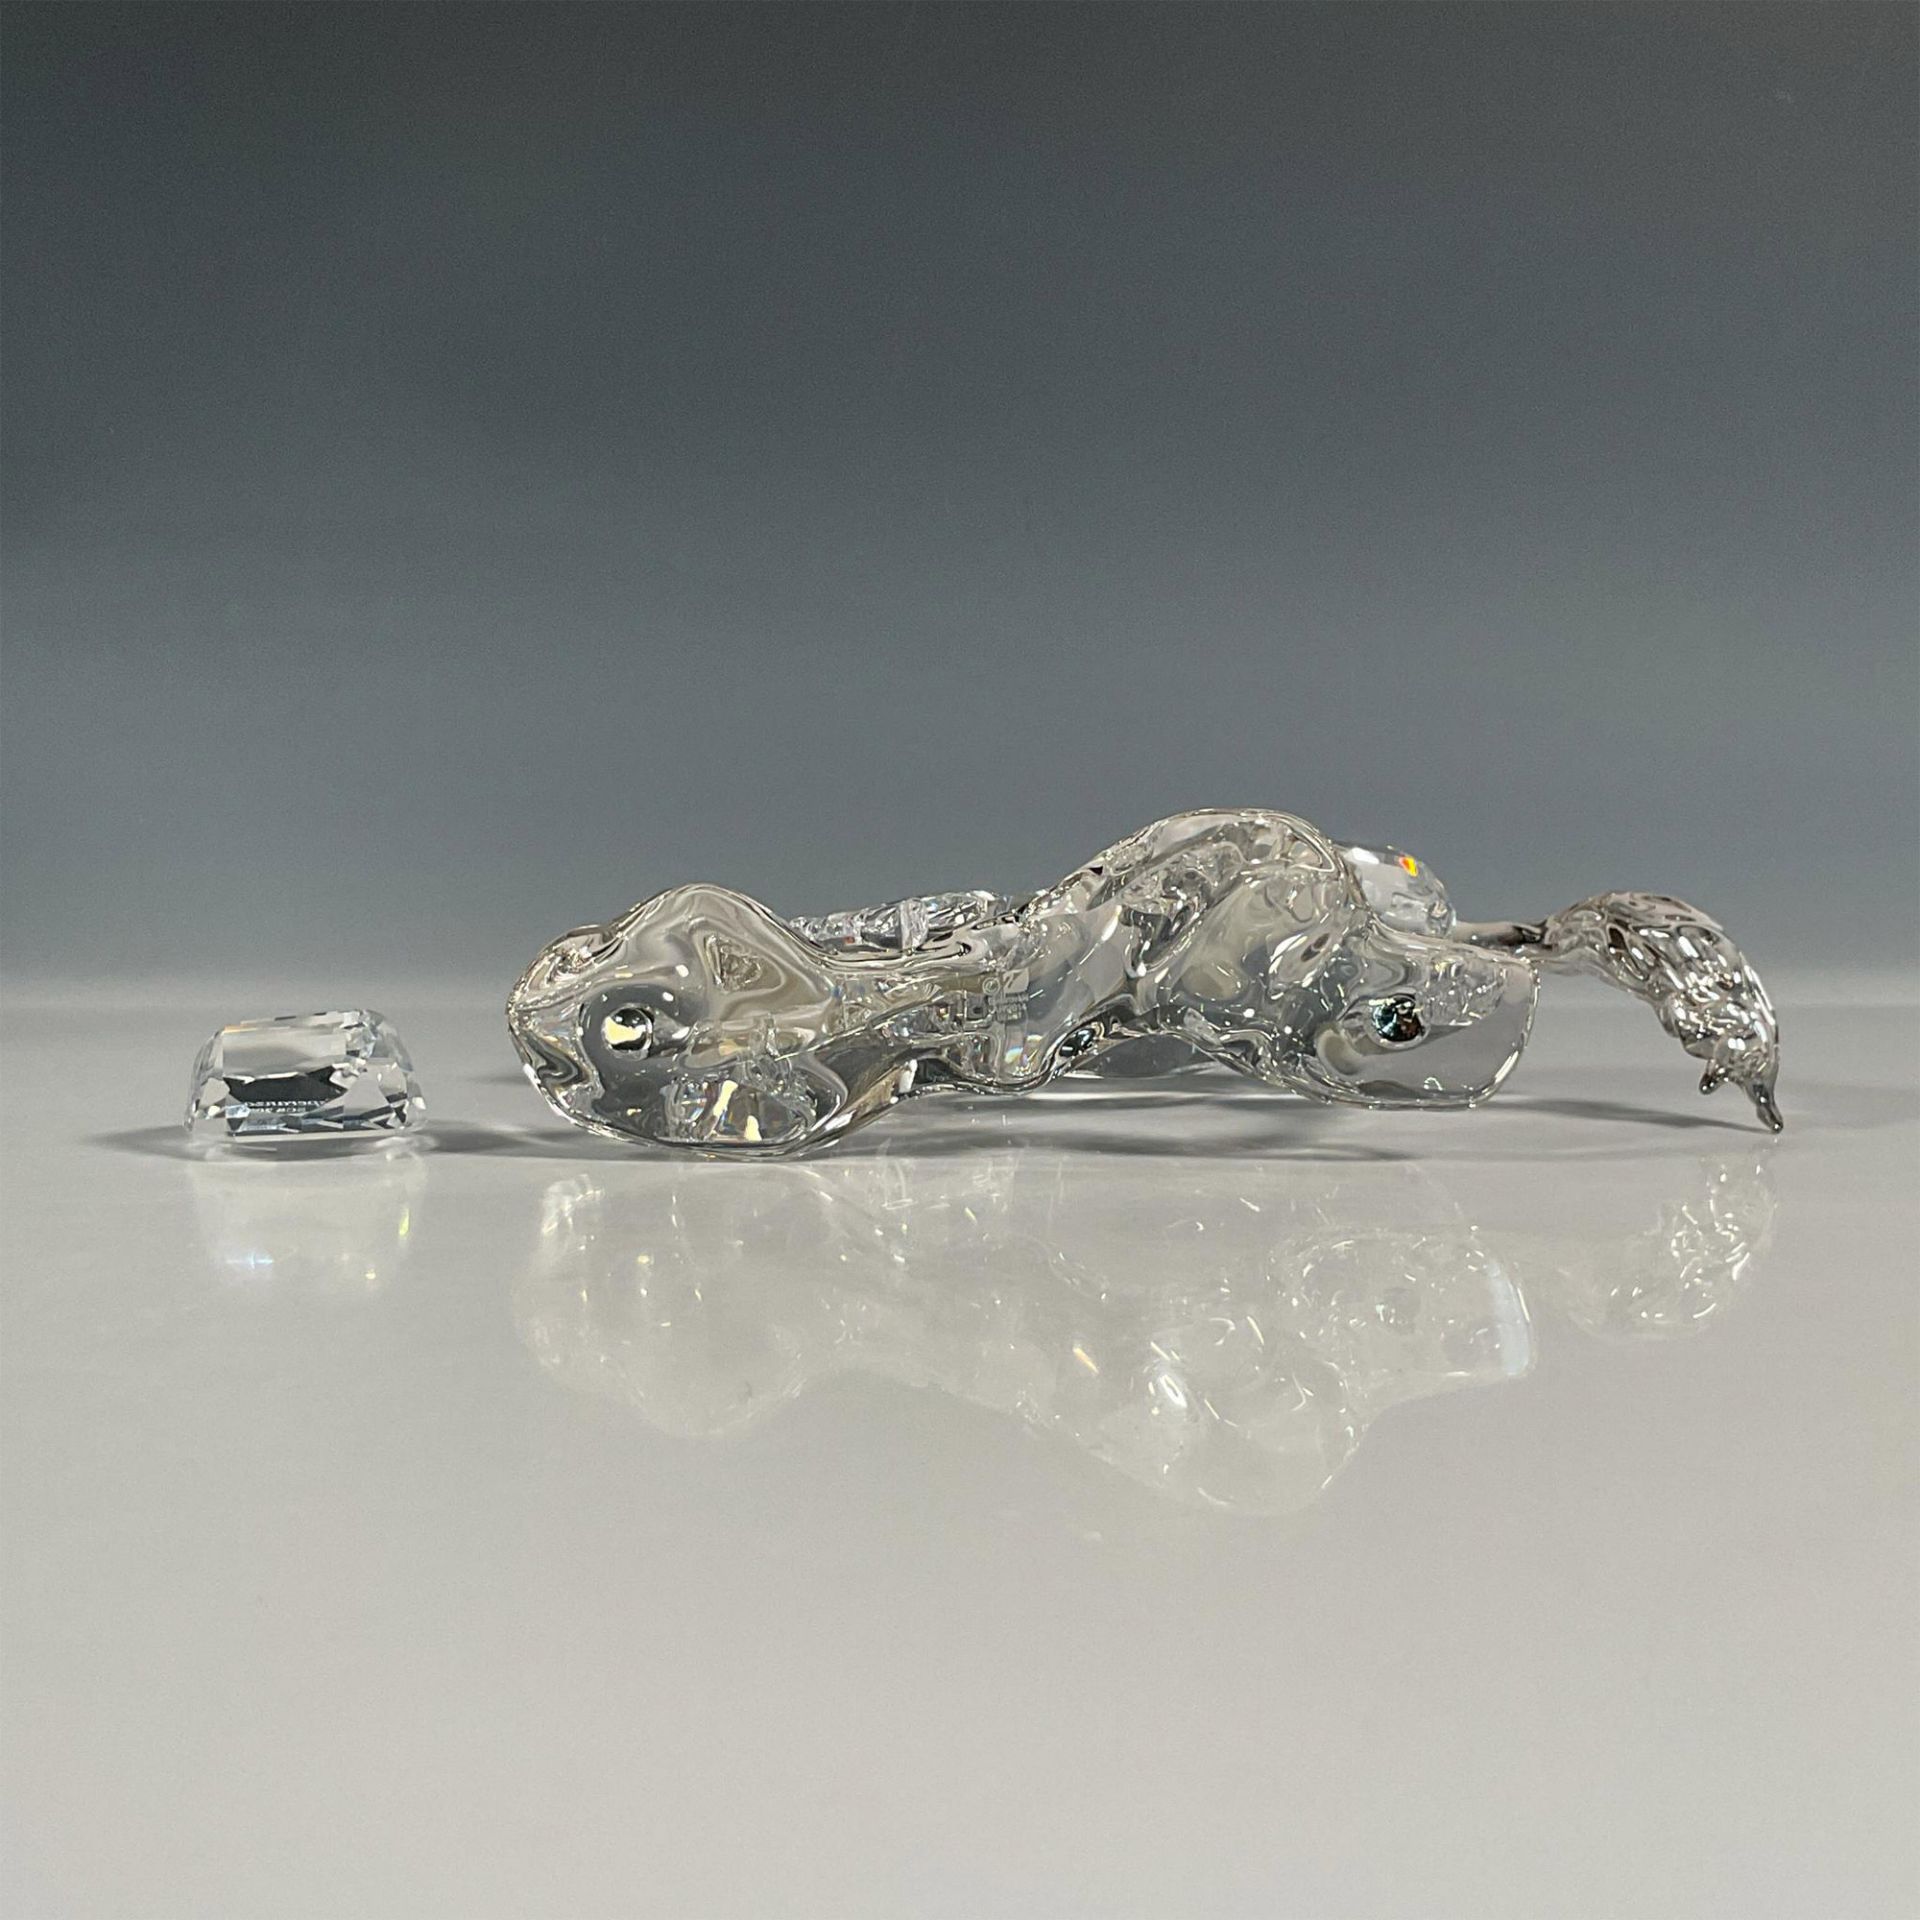 Swarovski Crystal Figurine with Plaque, Esperanza - Image 4 of 6